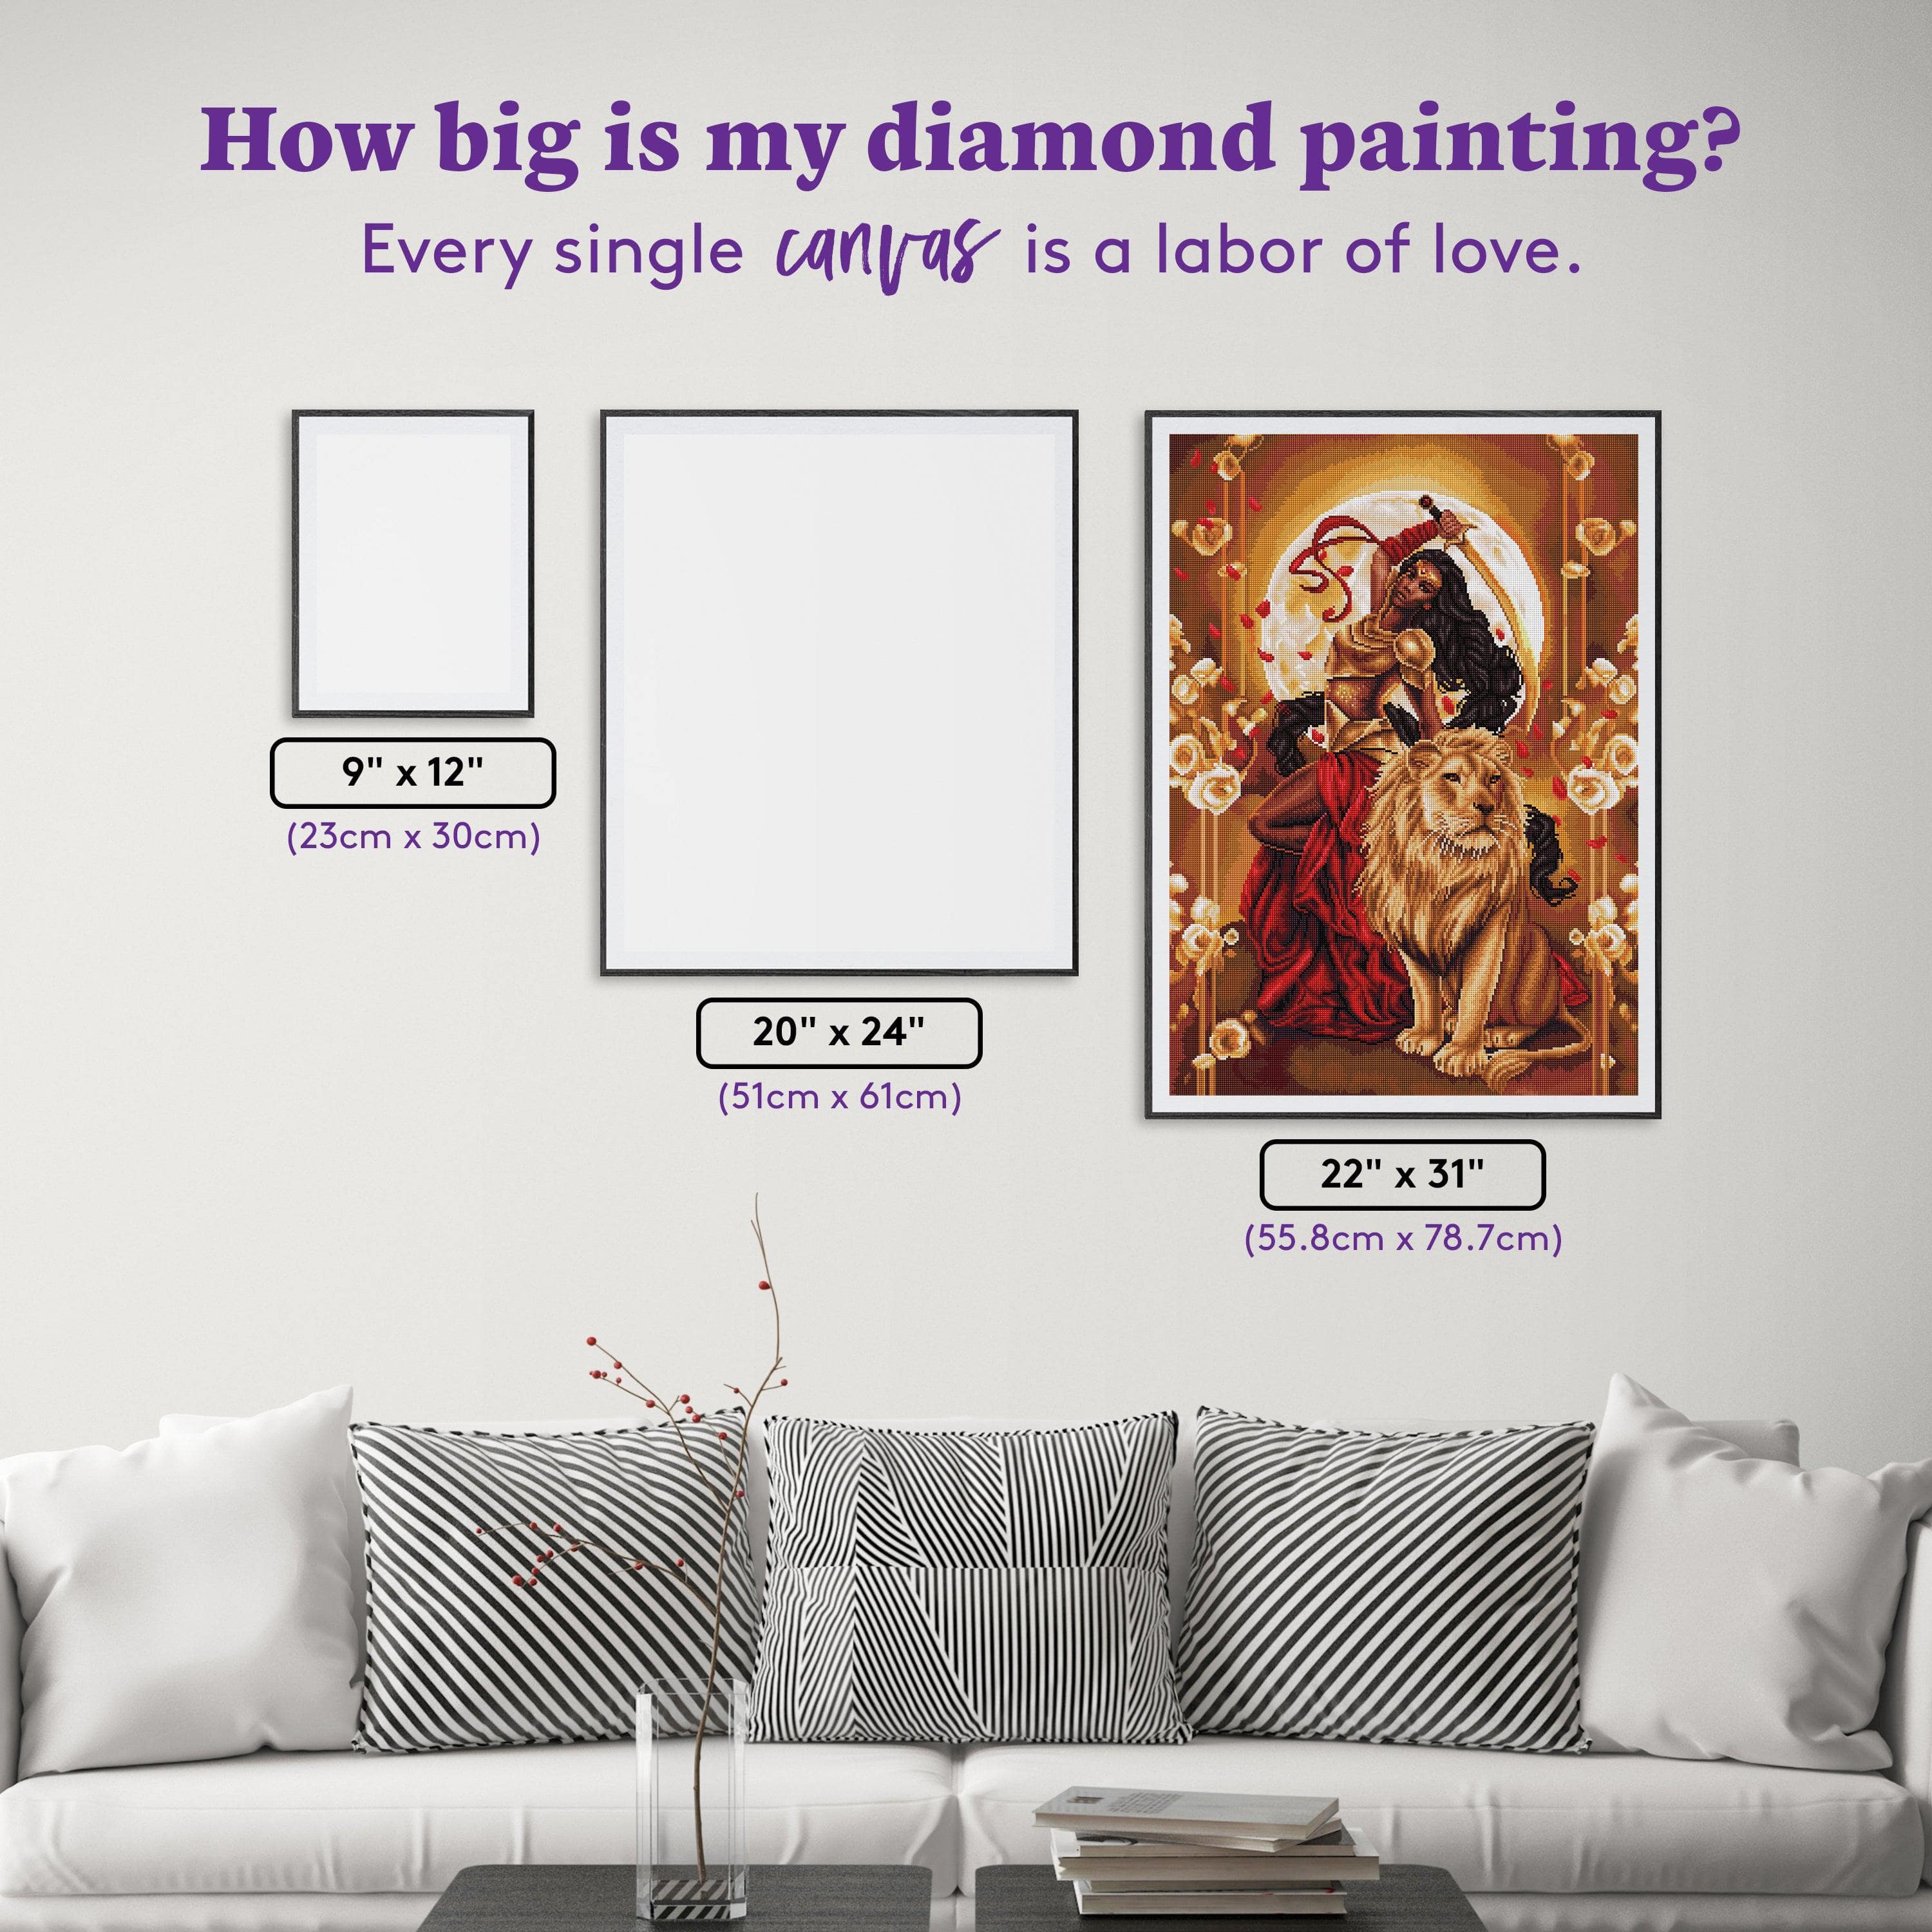 Passion Evening Diamond Painting Kit (Full Drill) – Paint With Diamonds